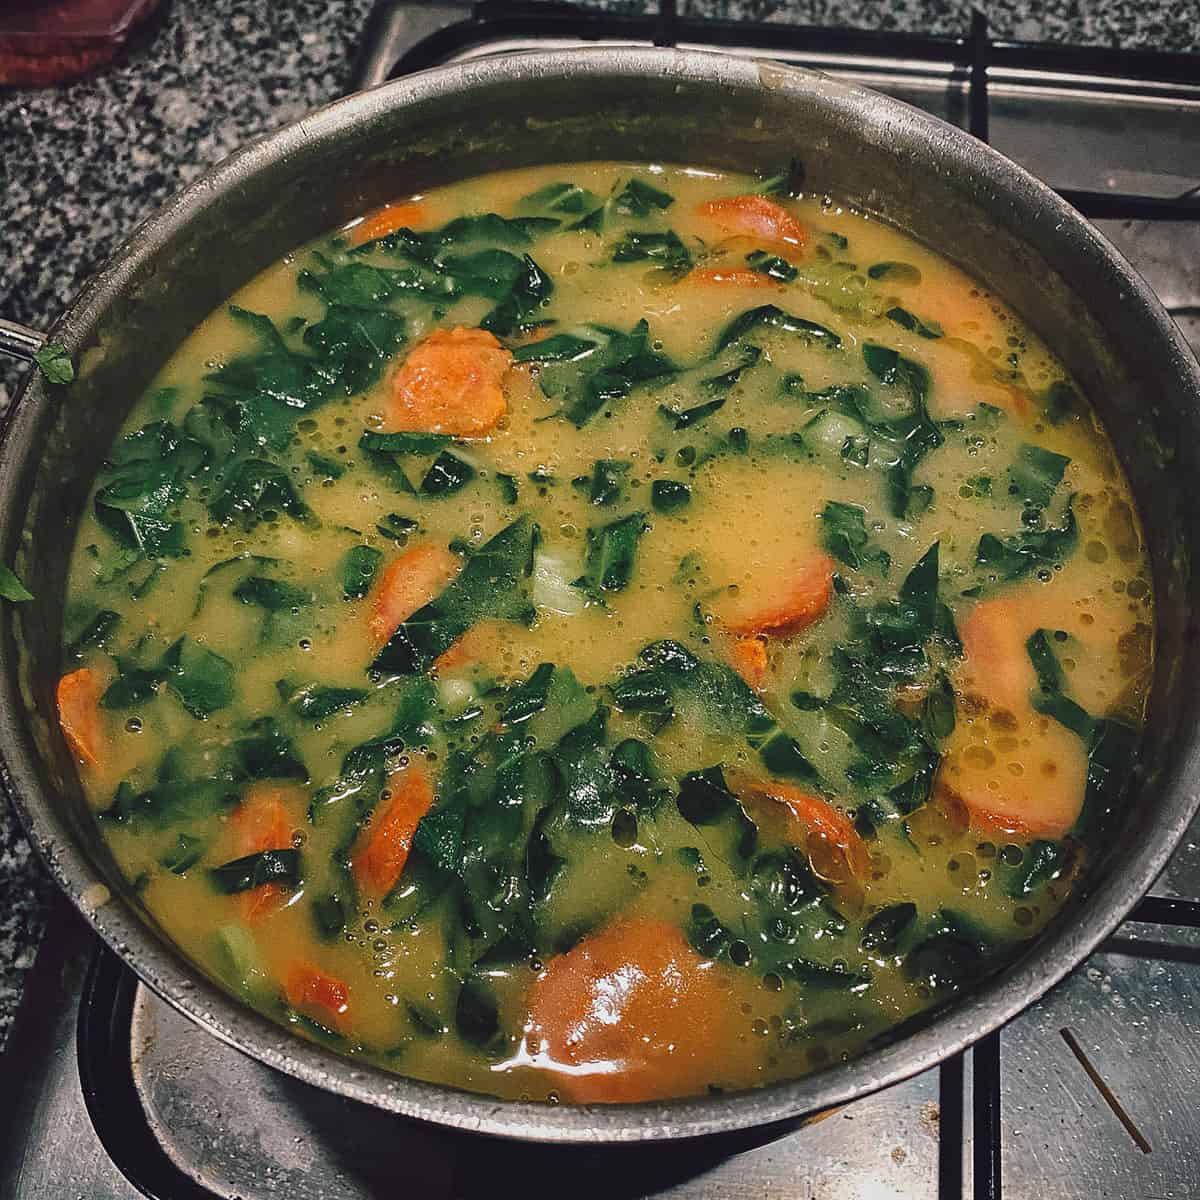 Caldo verde, Portuguese kale soup